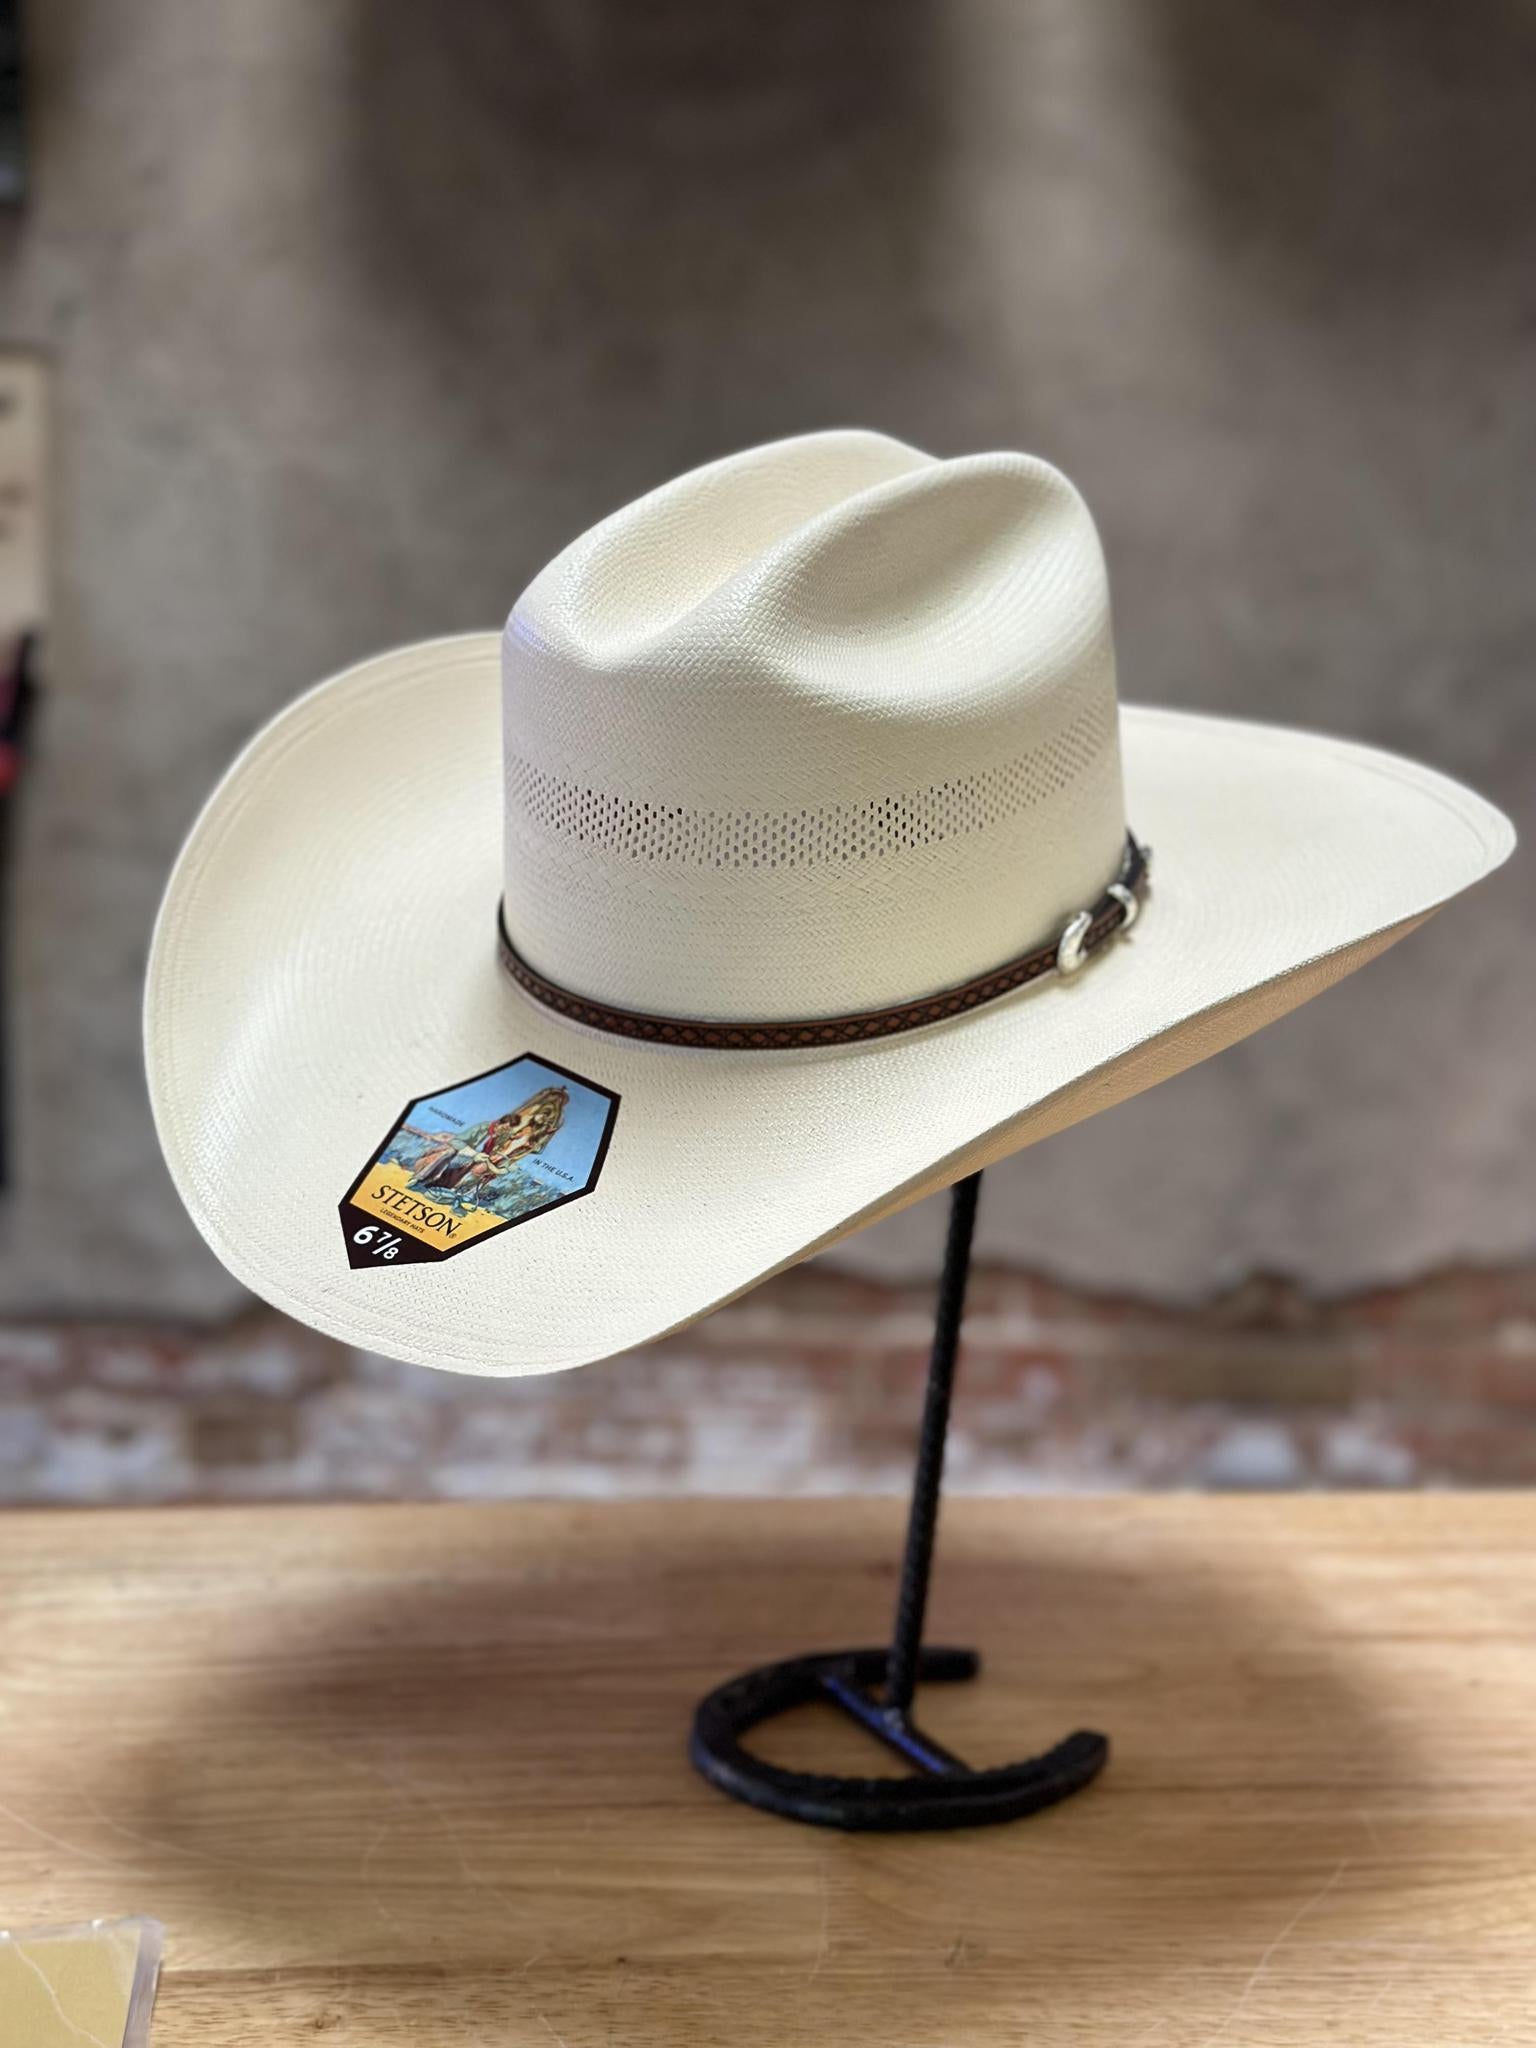 Woven Straw Cowboy Hat 3 Pieces Wide Brim Beach Hats for Women